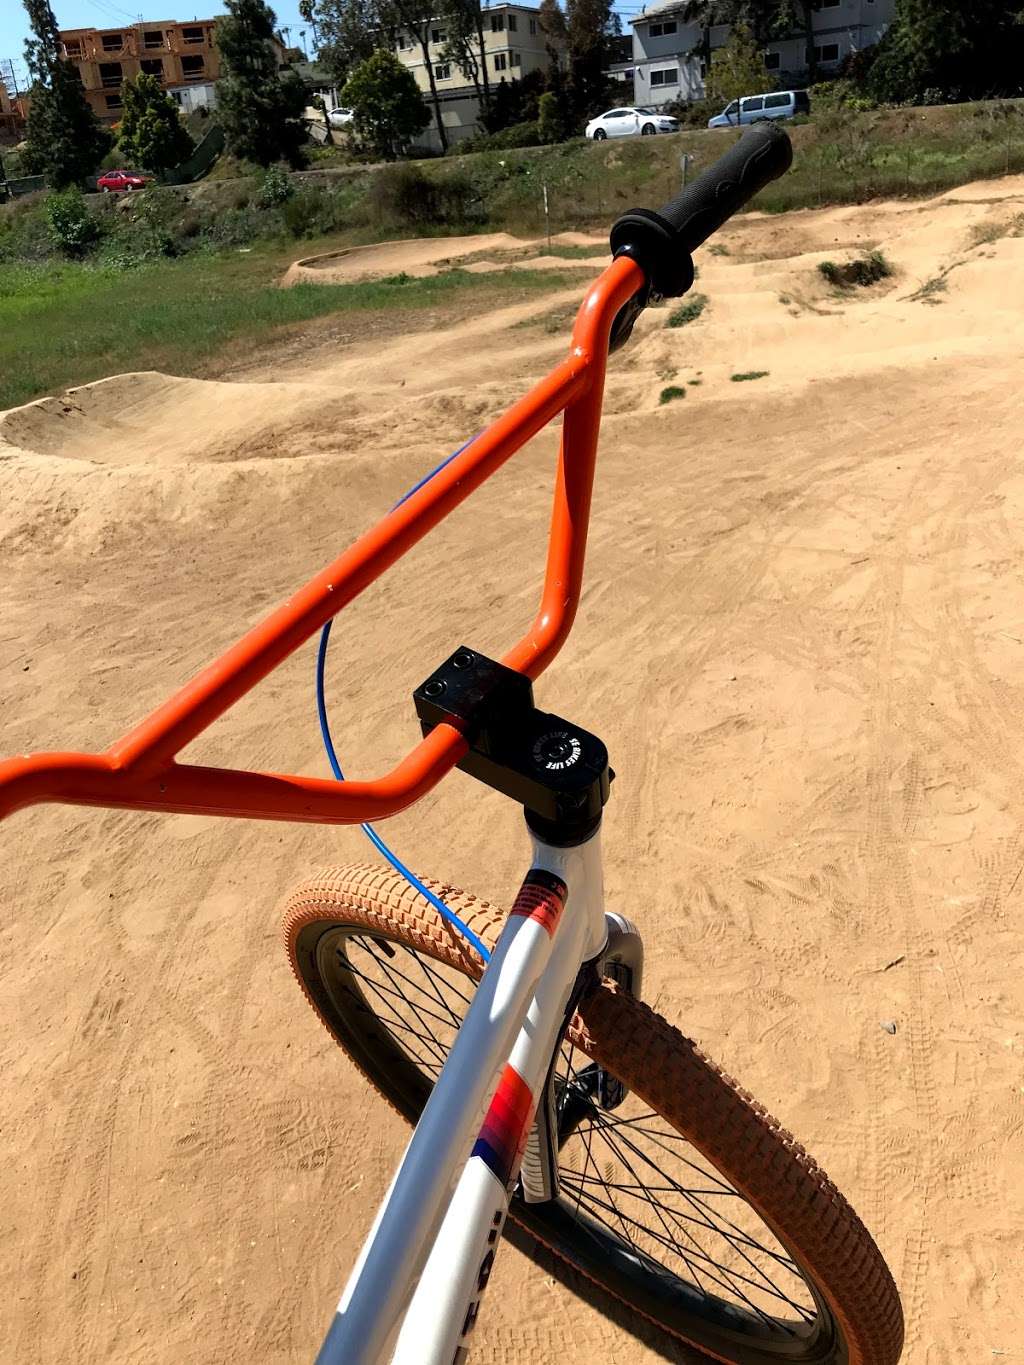 Kiddies Dirt Jumps Freeride Bike Park | San Diego, CA 92107, USA